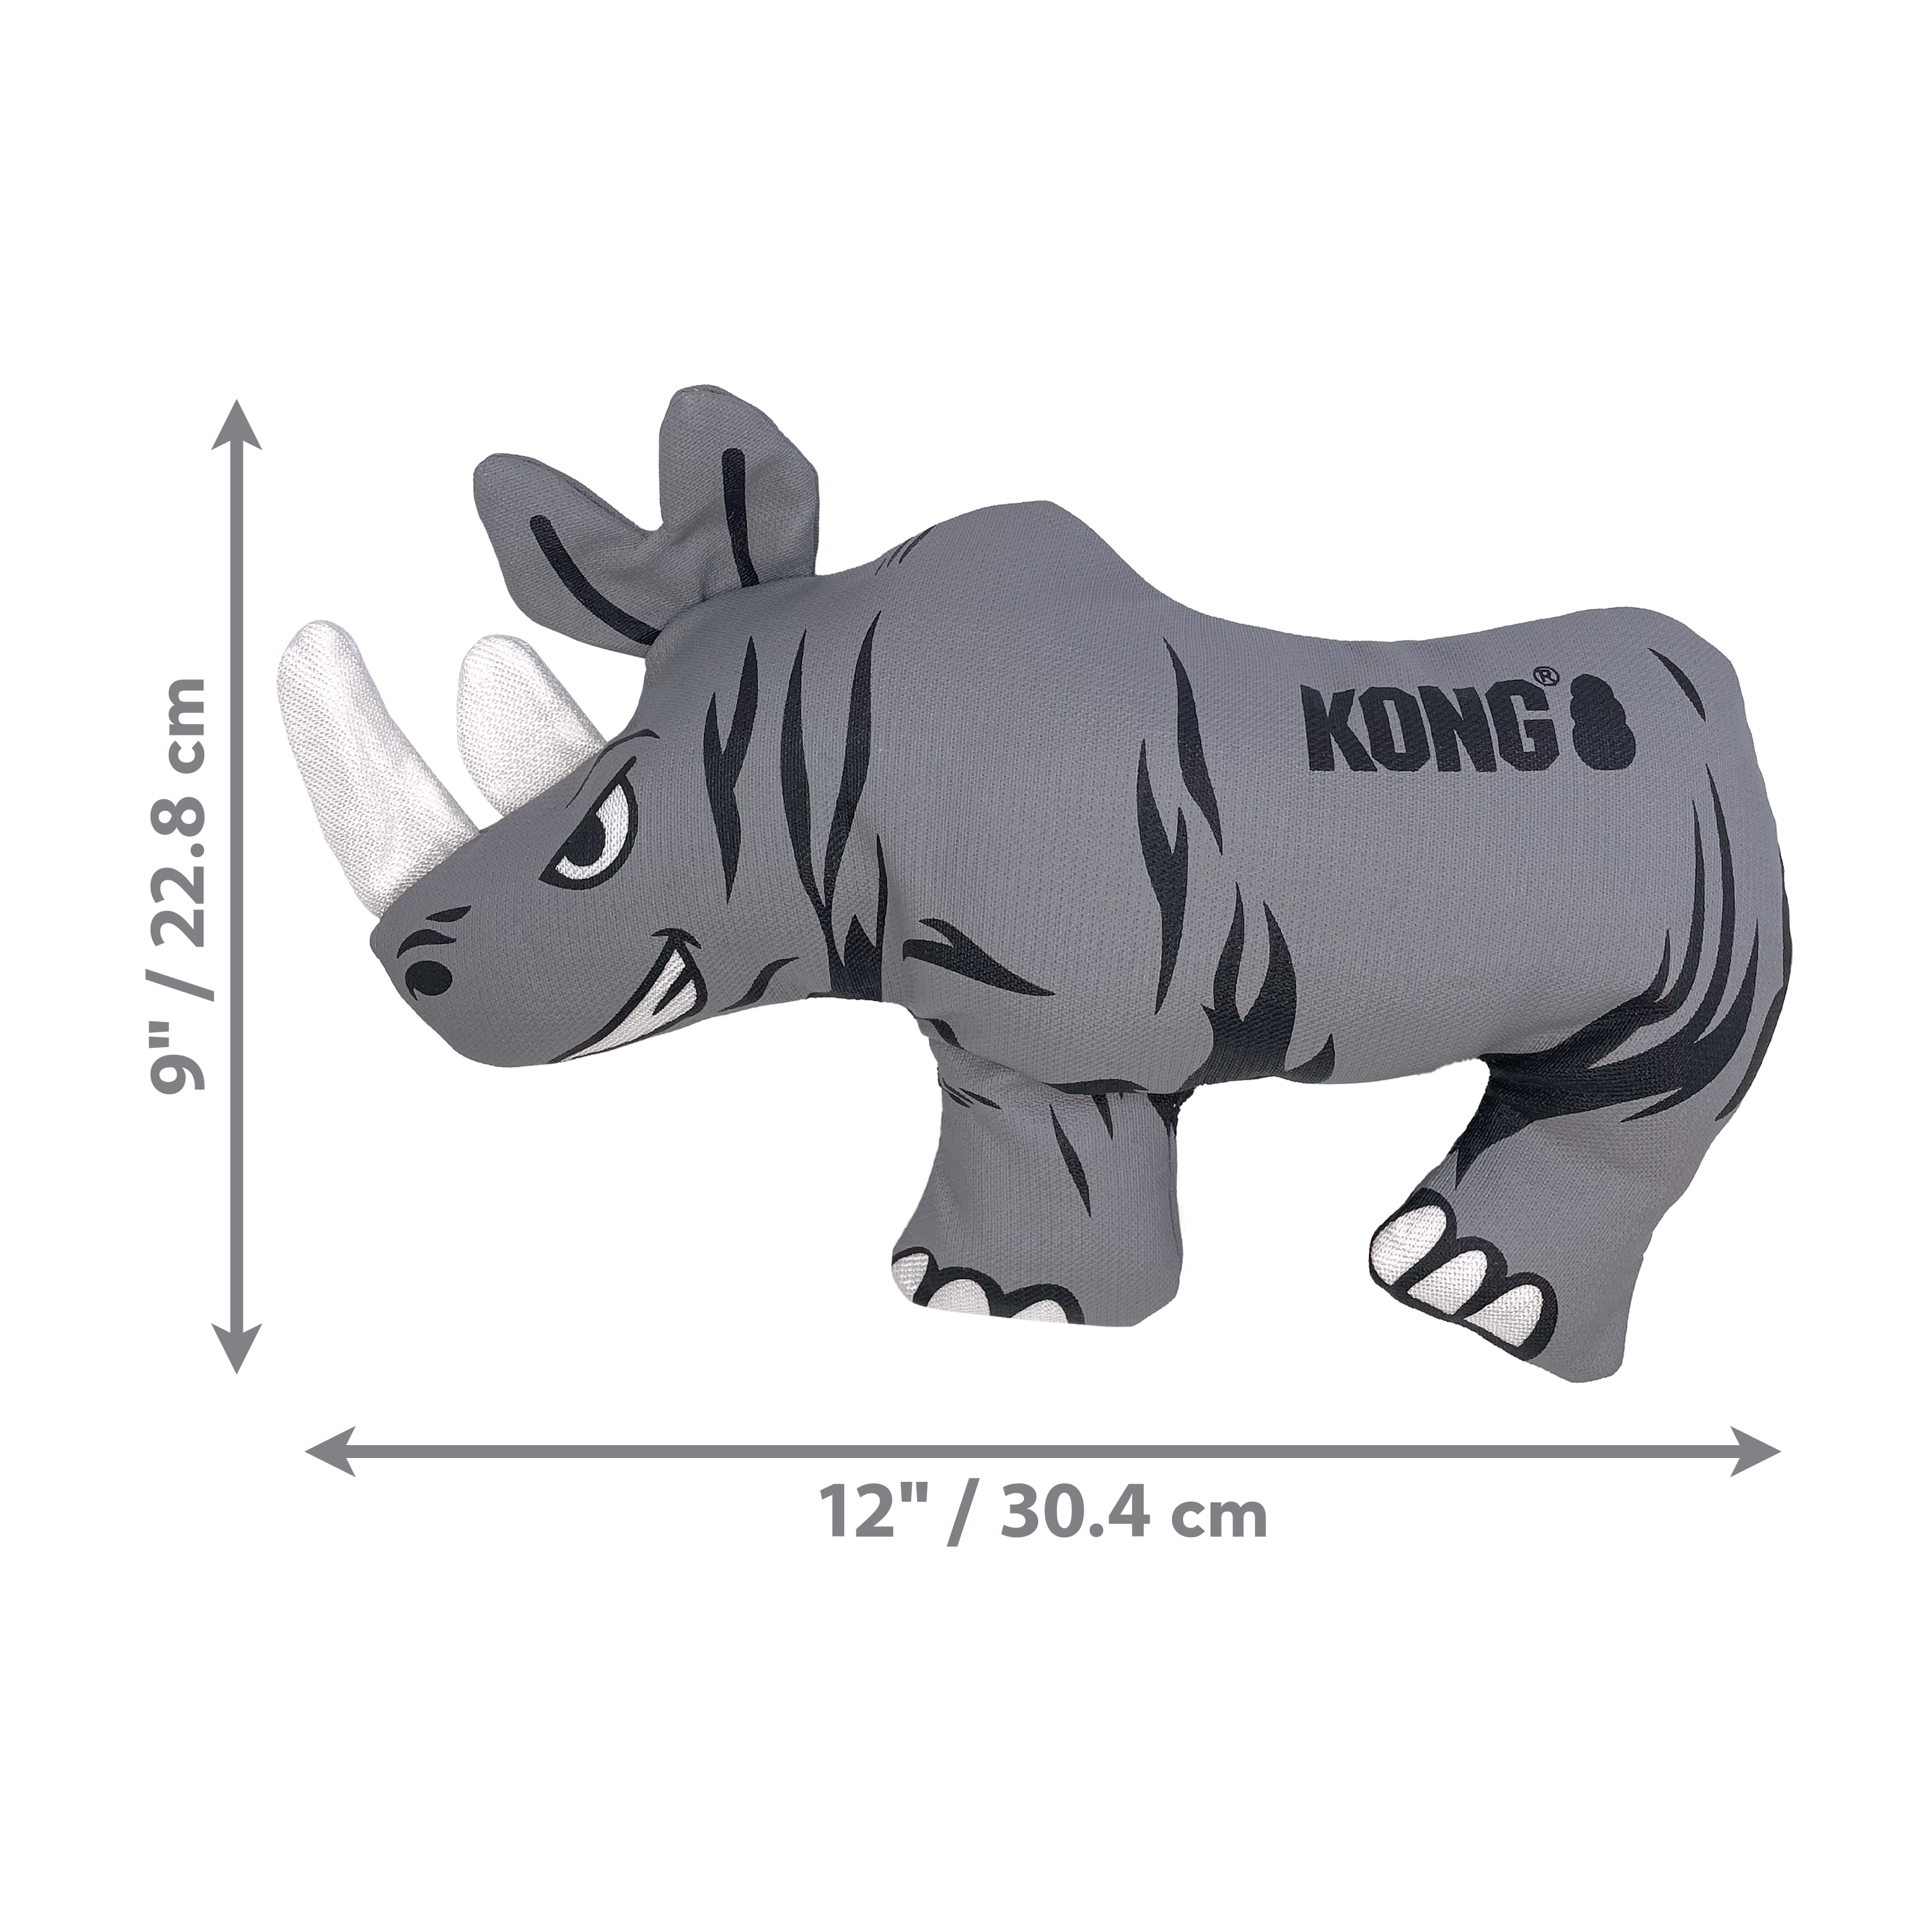 Maxx Rhino dimoffpack product afbeelding